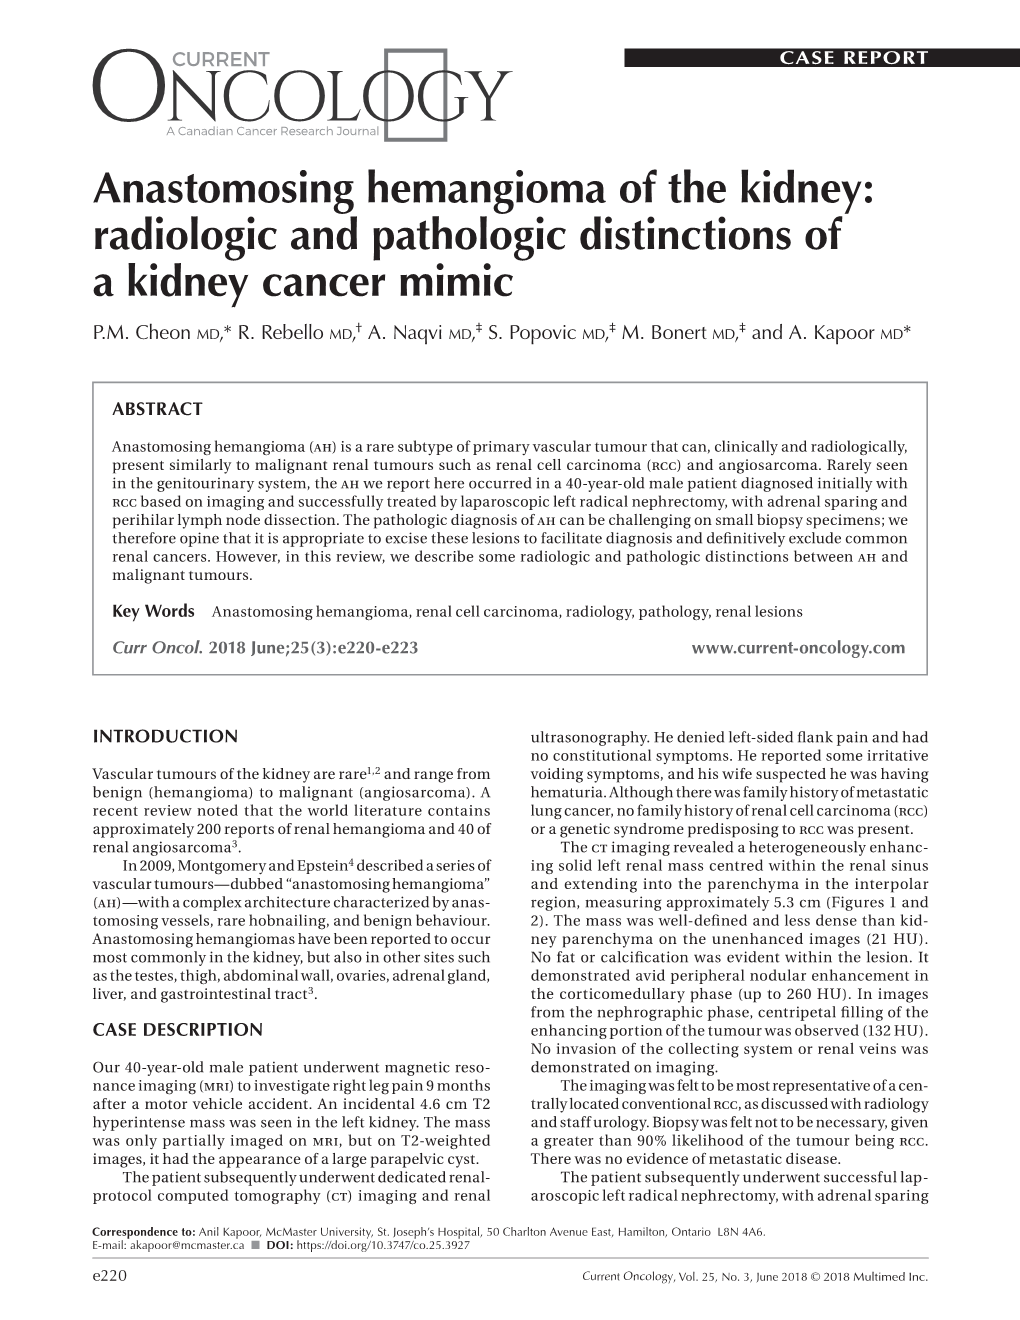 Anastomosing Hemangioma of the Kidney: Radiologic and Pathologic Distinctions of a Kidney Cancer Mimic